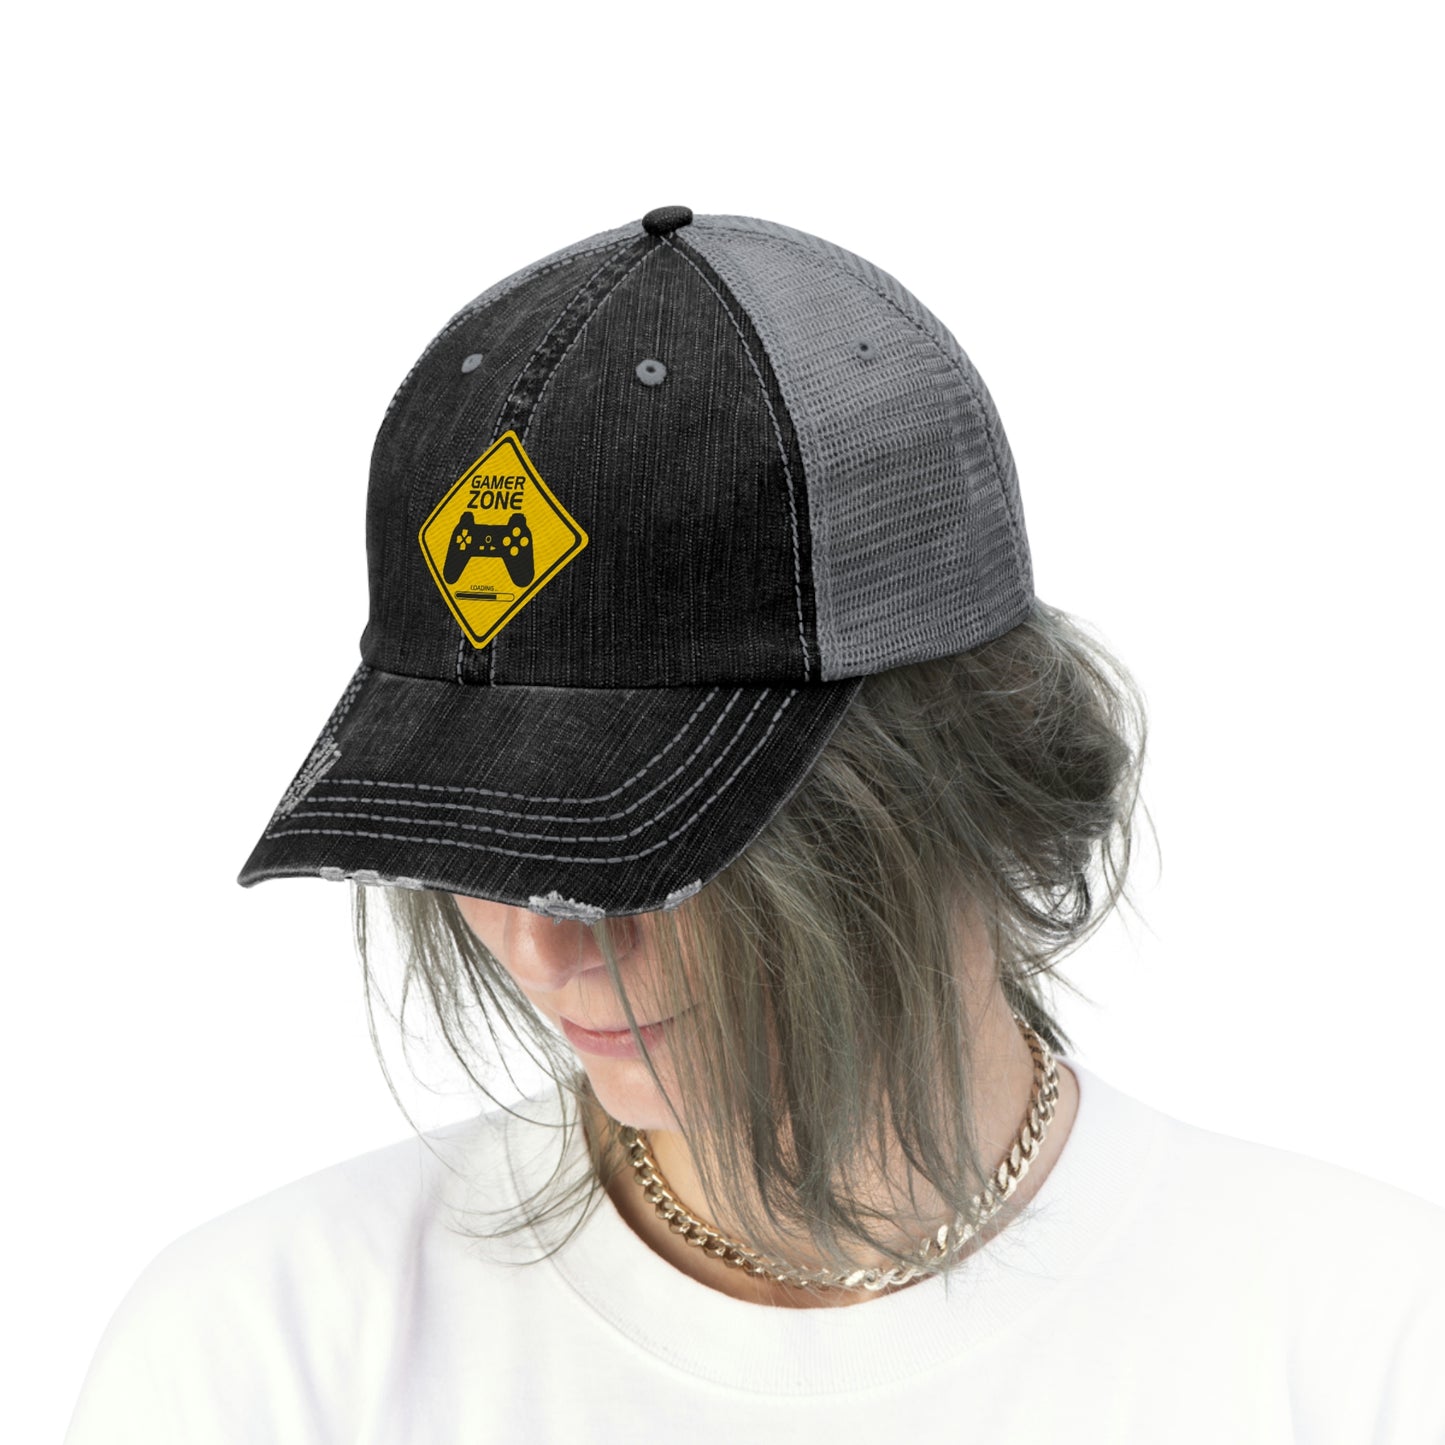 Gamer Zone Trucker Hat